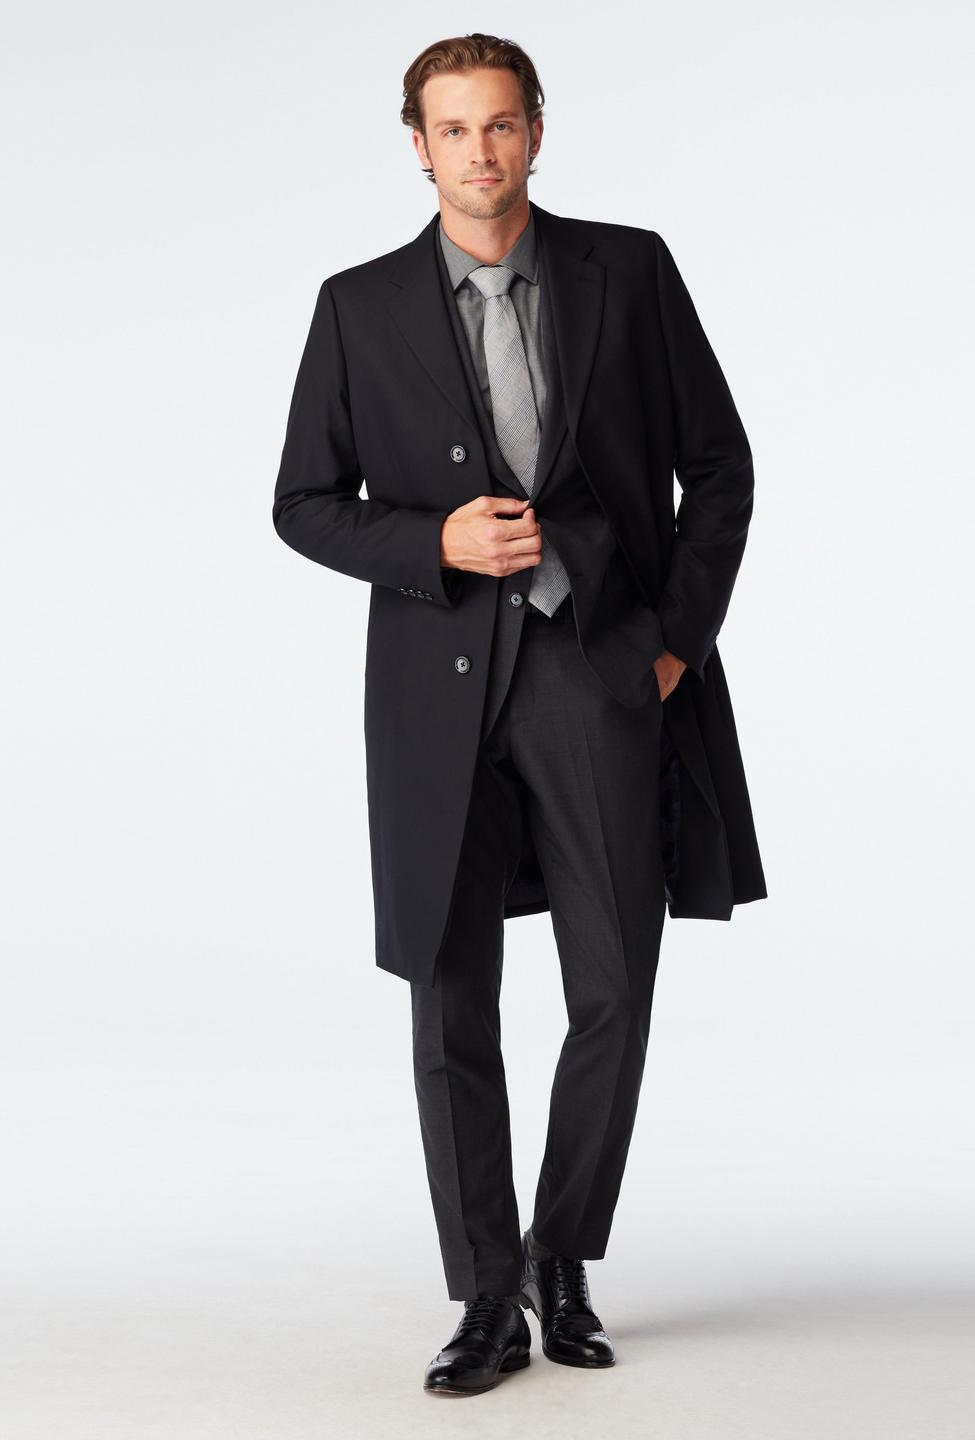 Black outerwear - Hatton Solid Design from Premium Indochino Collection